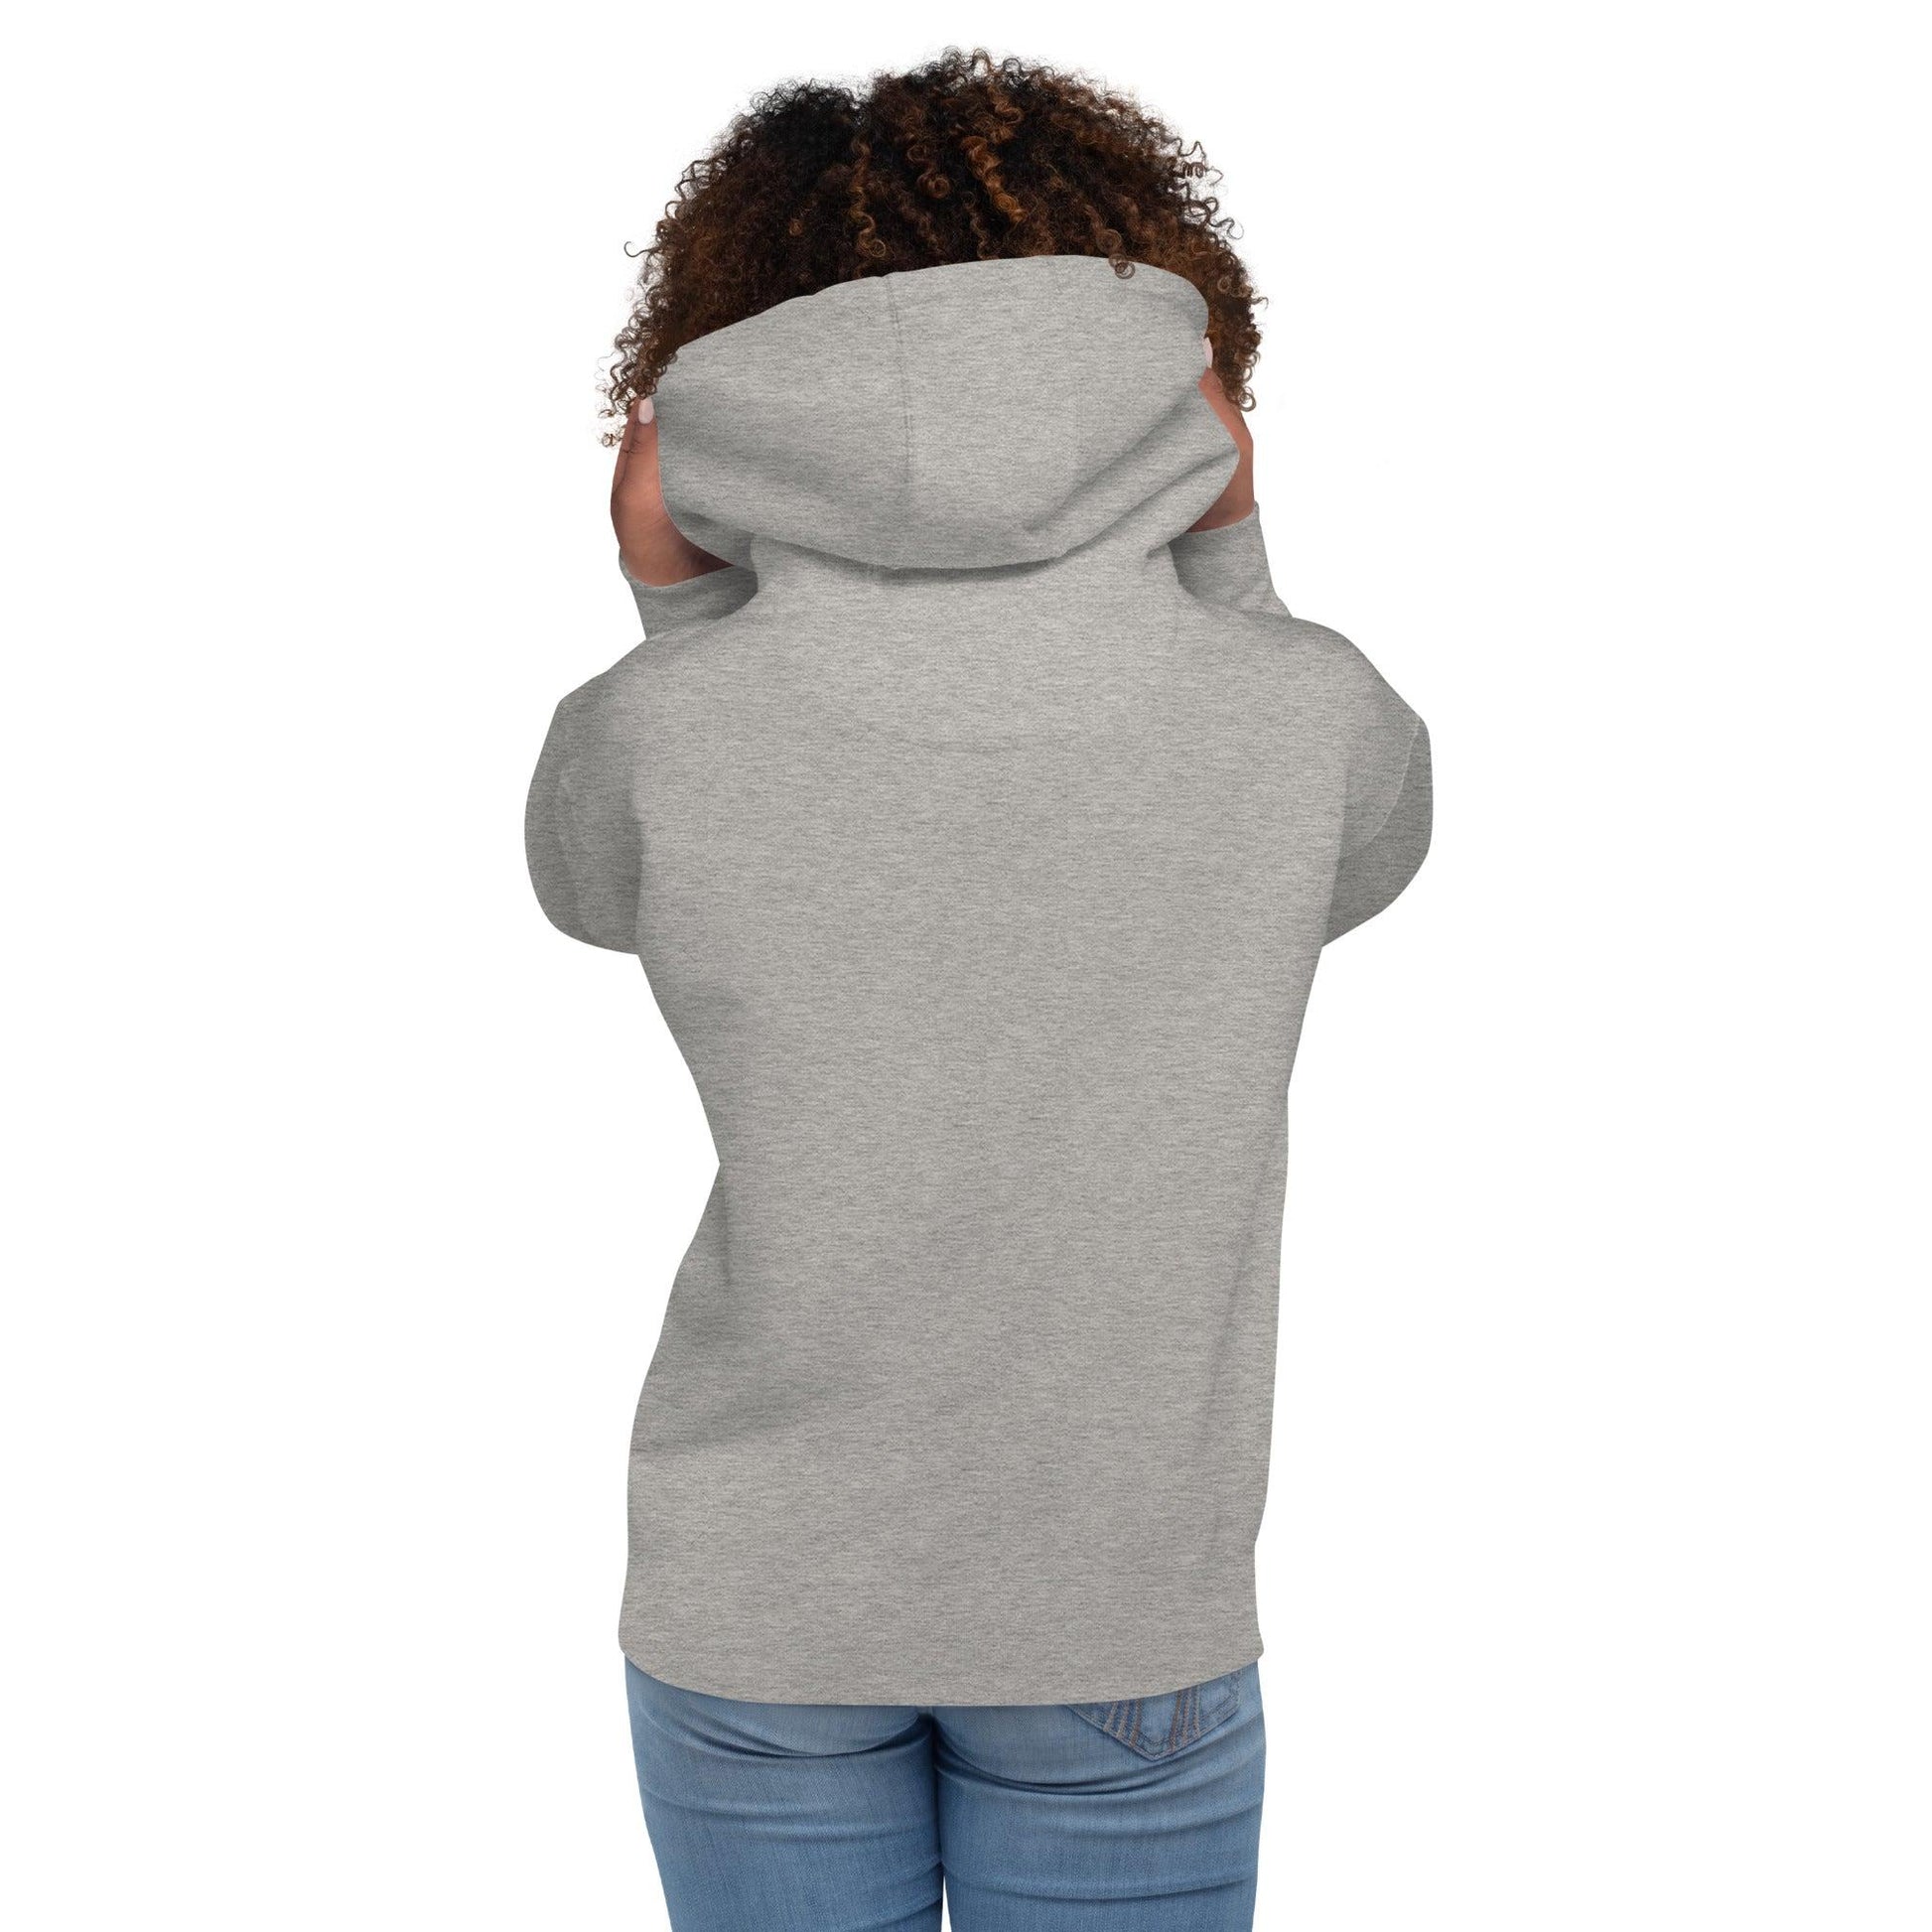 New York 199x Hoodie Sweatshirt NY City Comfort cotton hooded standard USA  size mens women -  Portugal